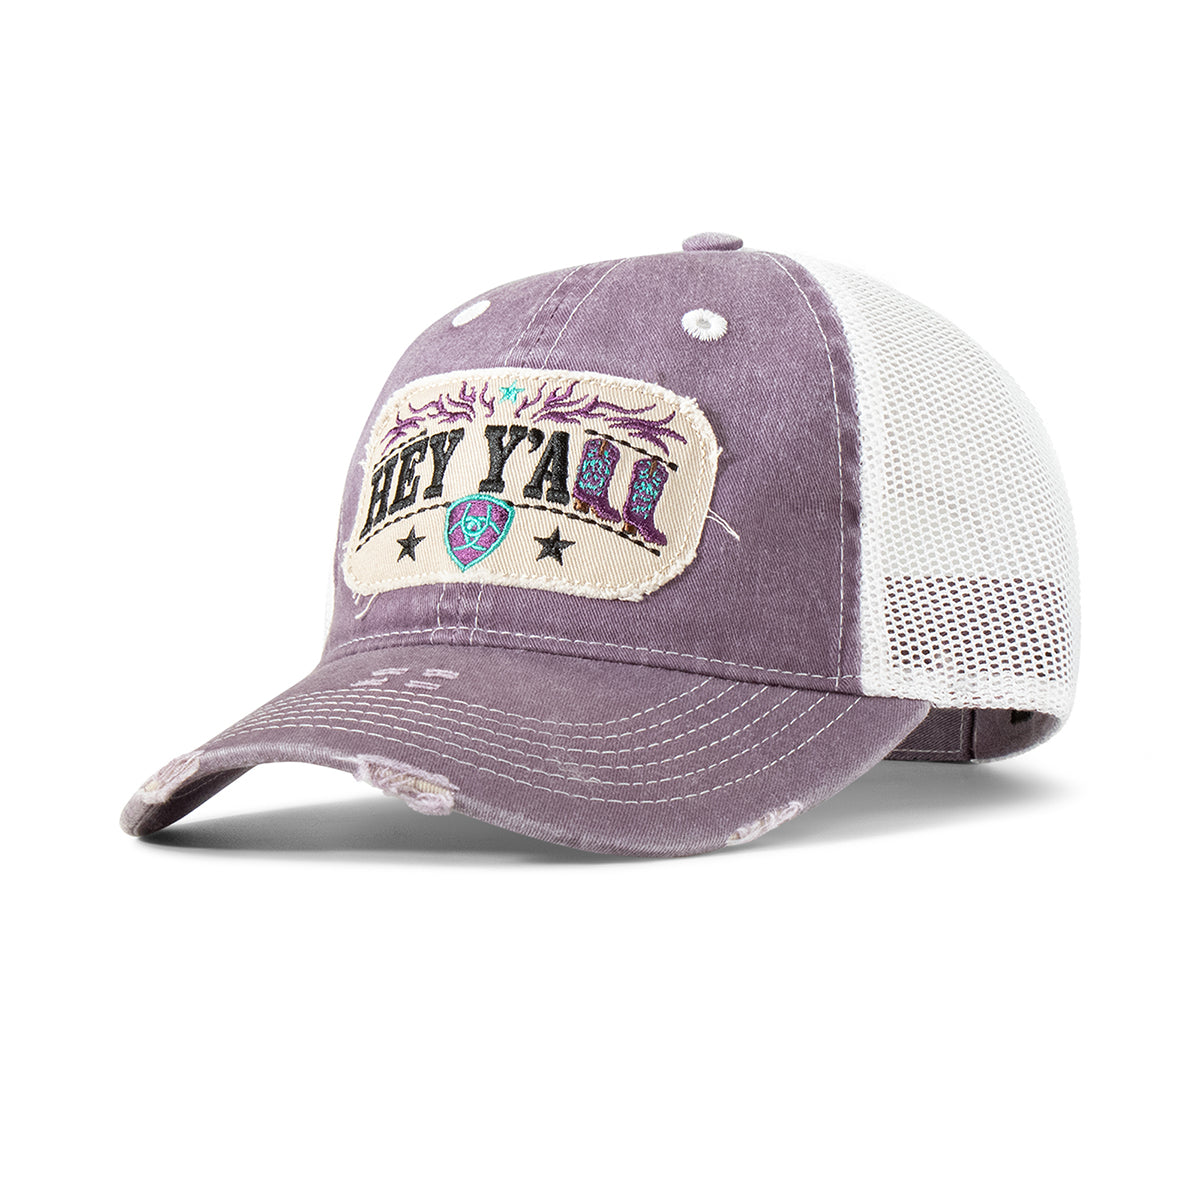 Ariat Women's Distressed Patch Cap - Dark Purple